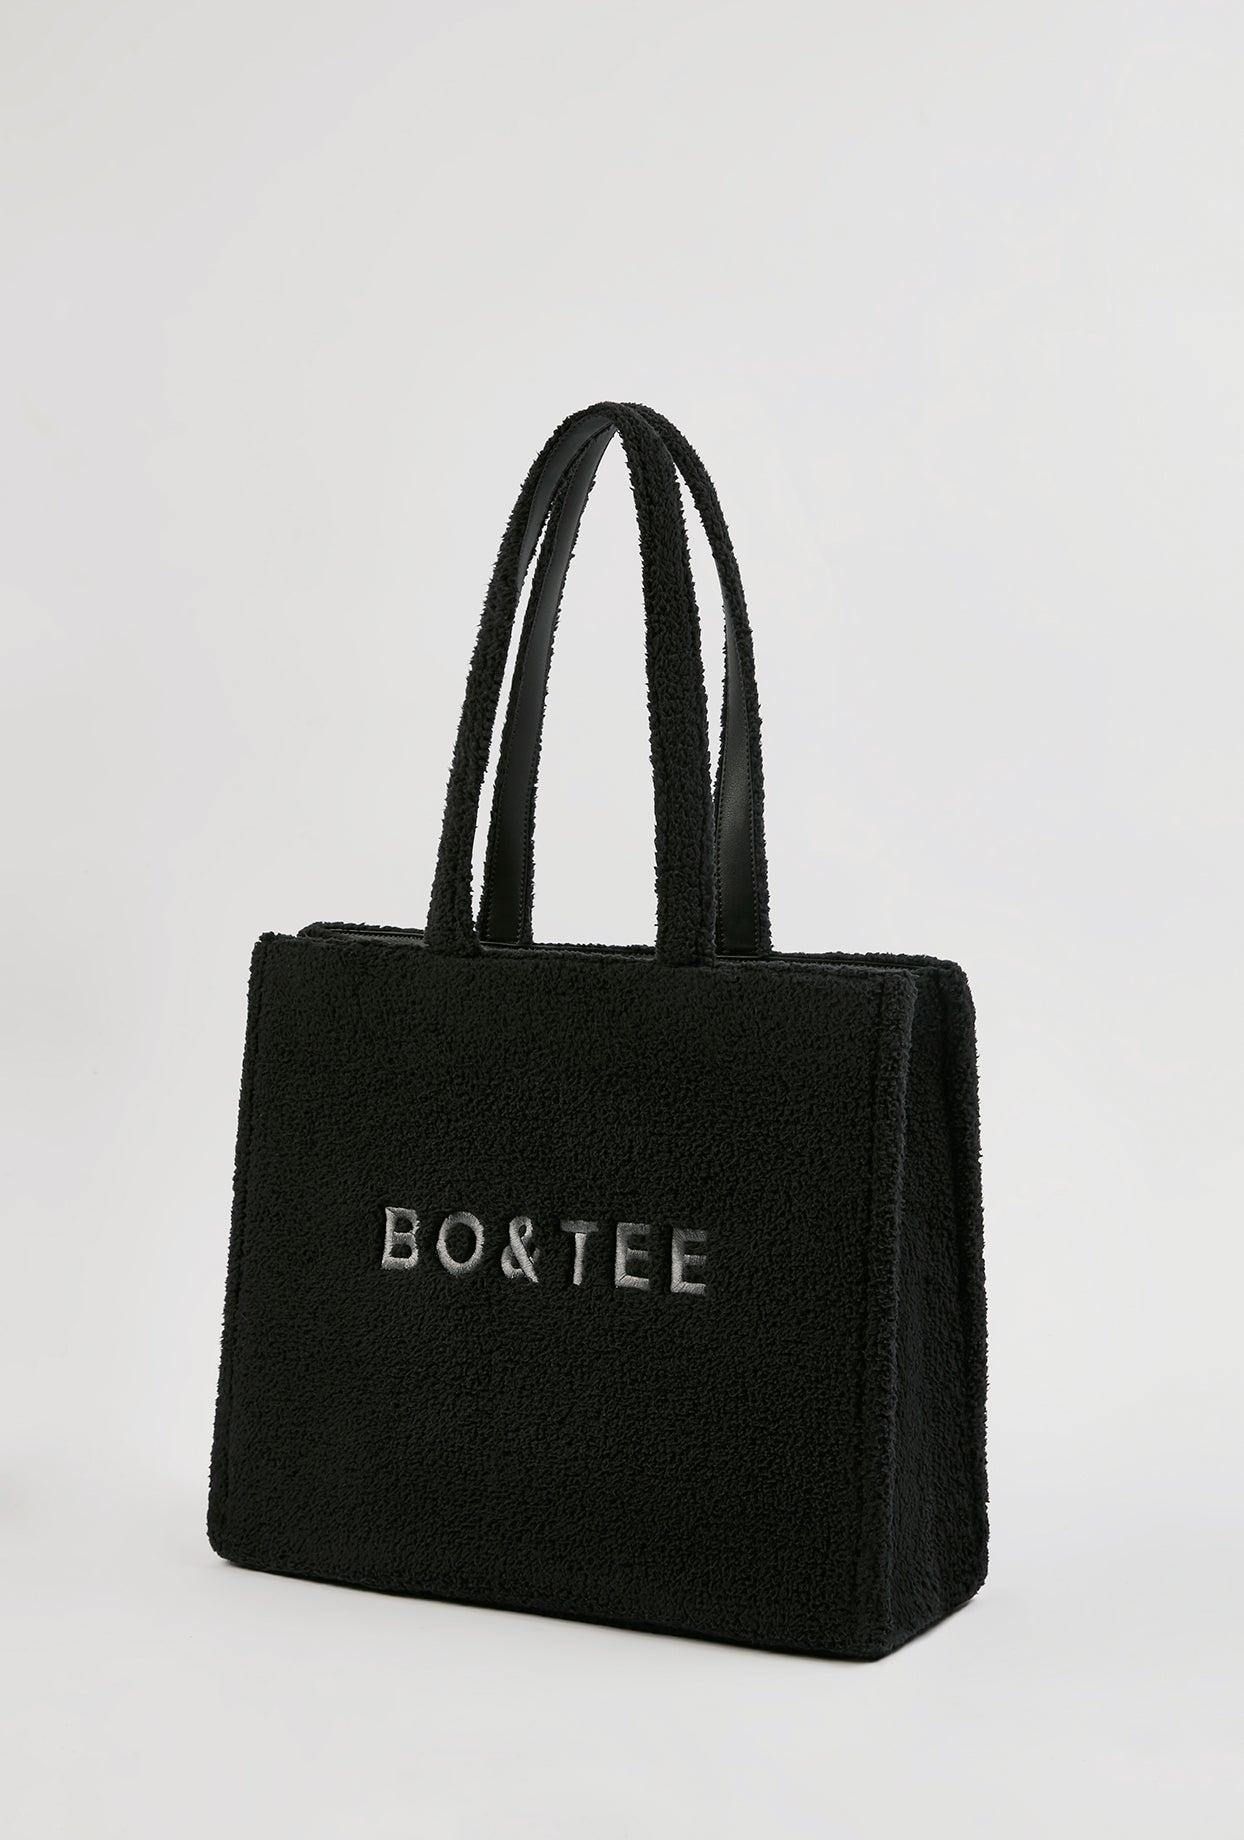 Fleece Tote Bag in Onyx